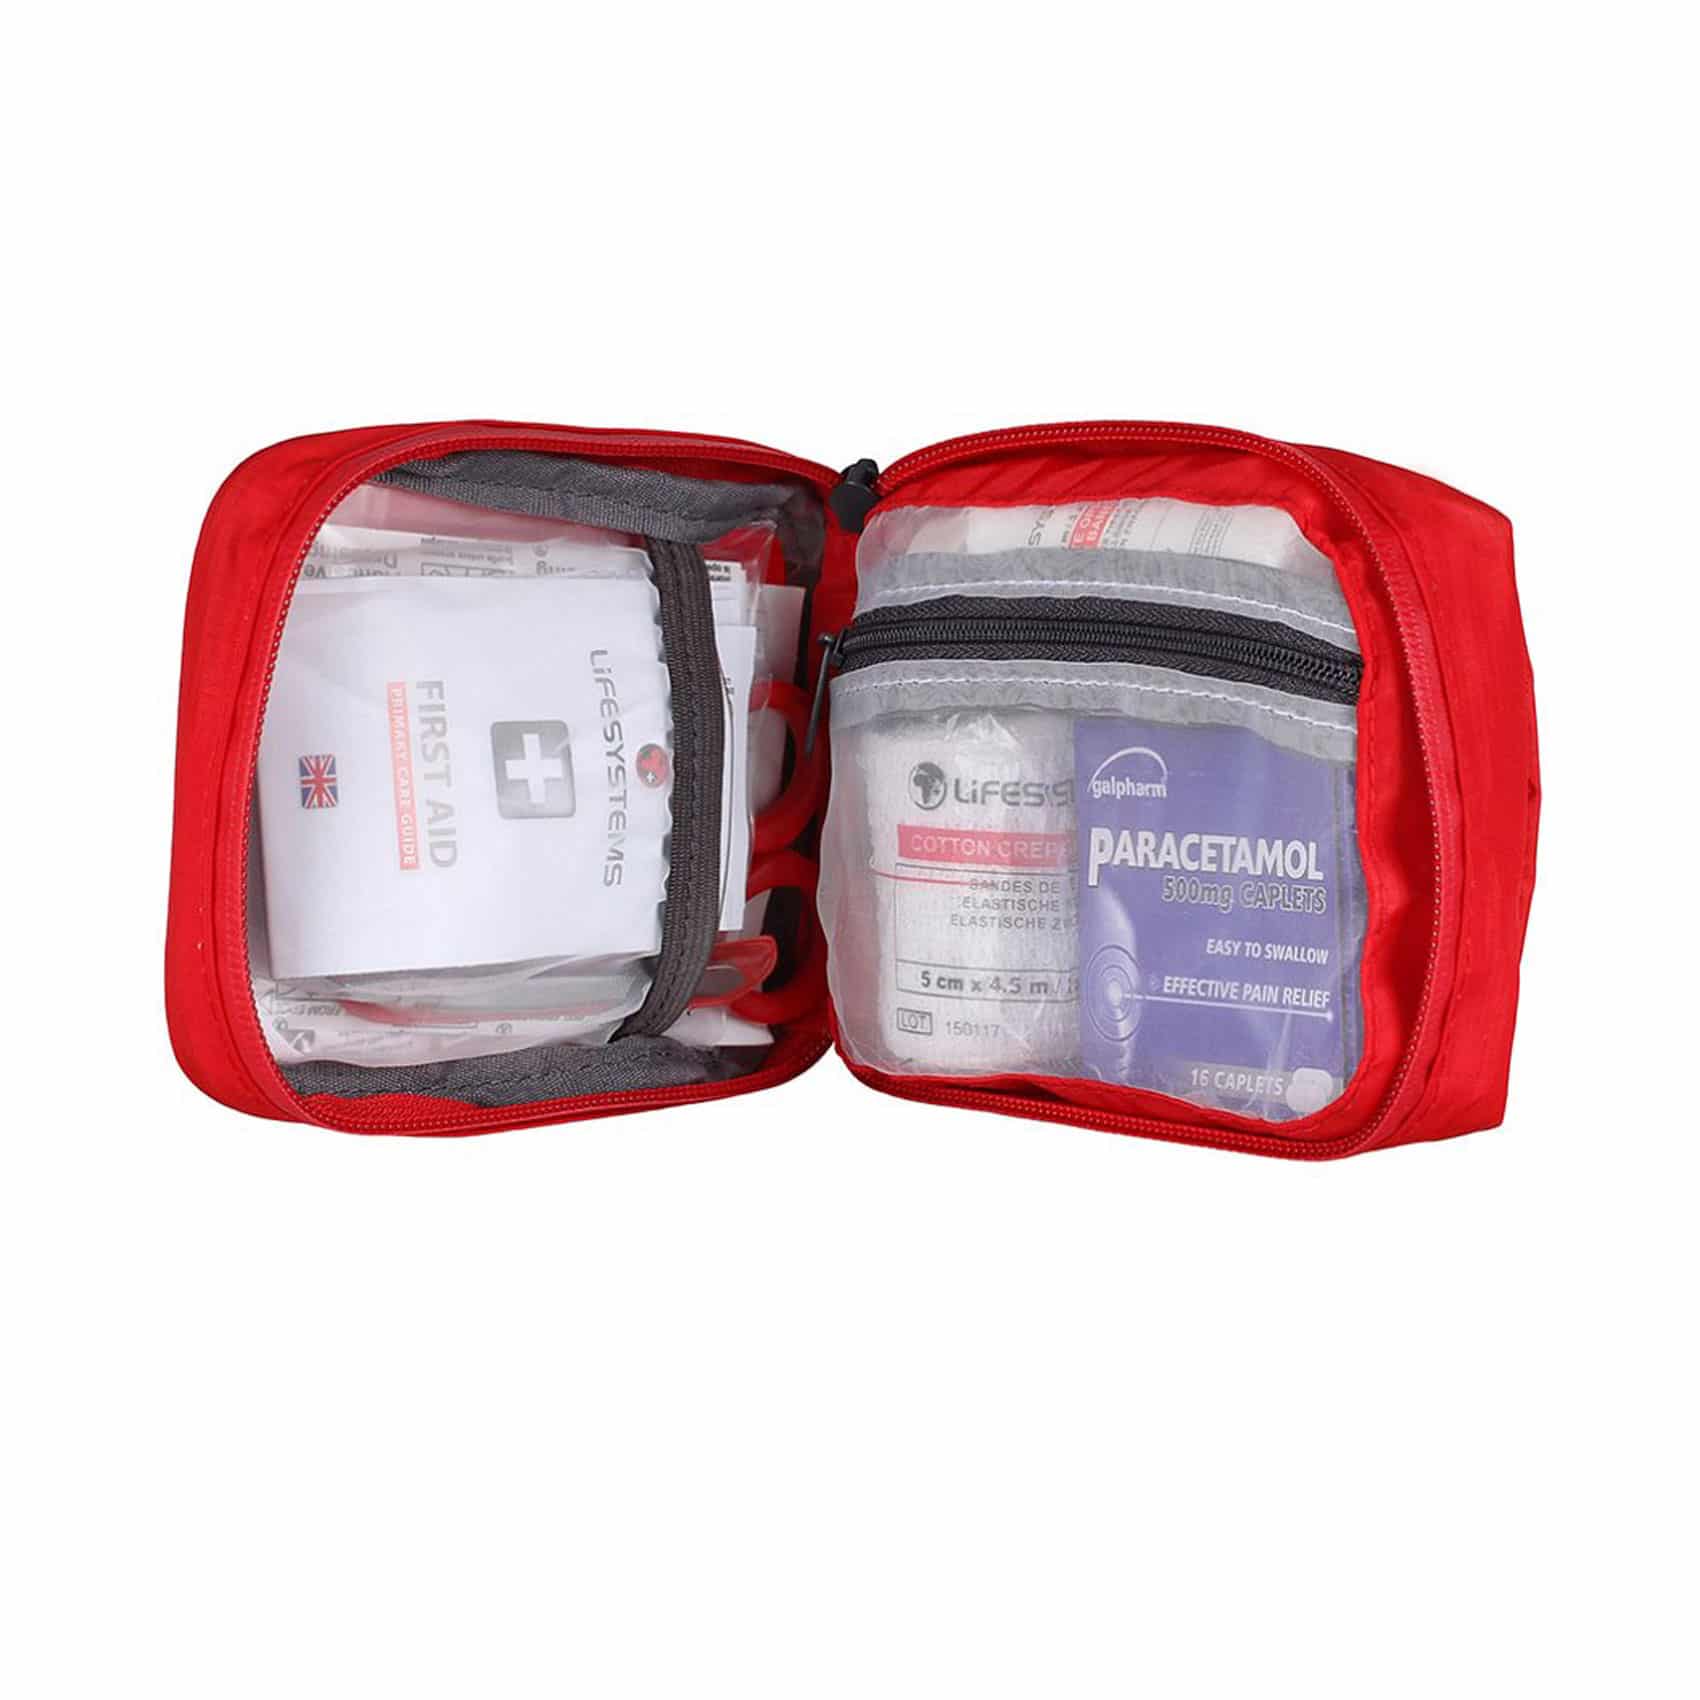 Lifesystems Trek first aid kit pronto soccorso per trekking - Sestogrado